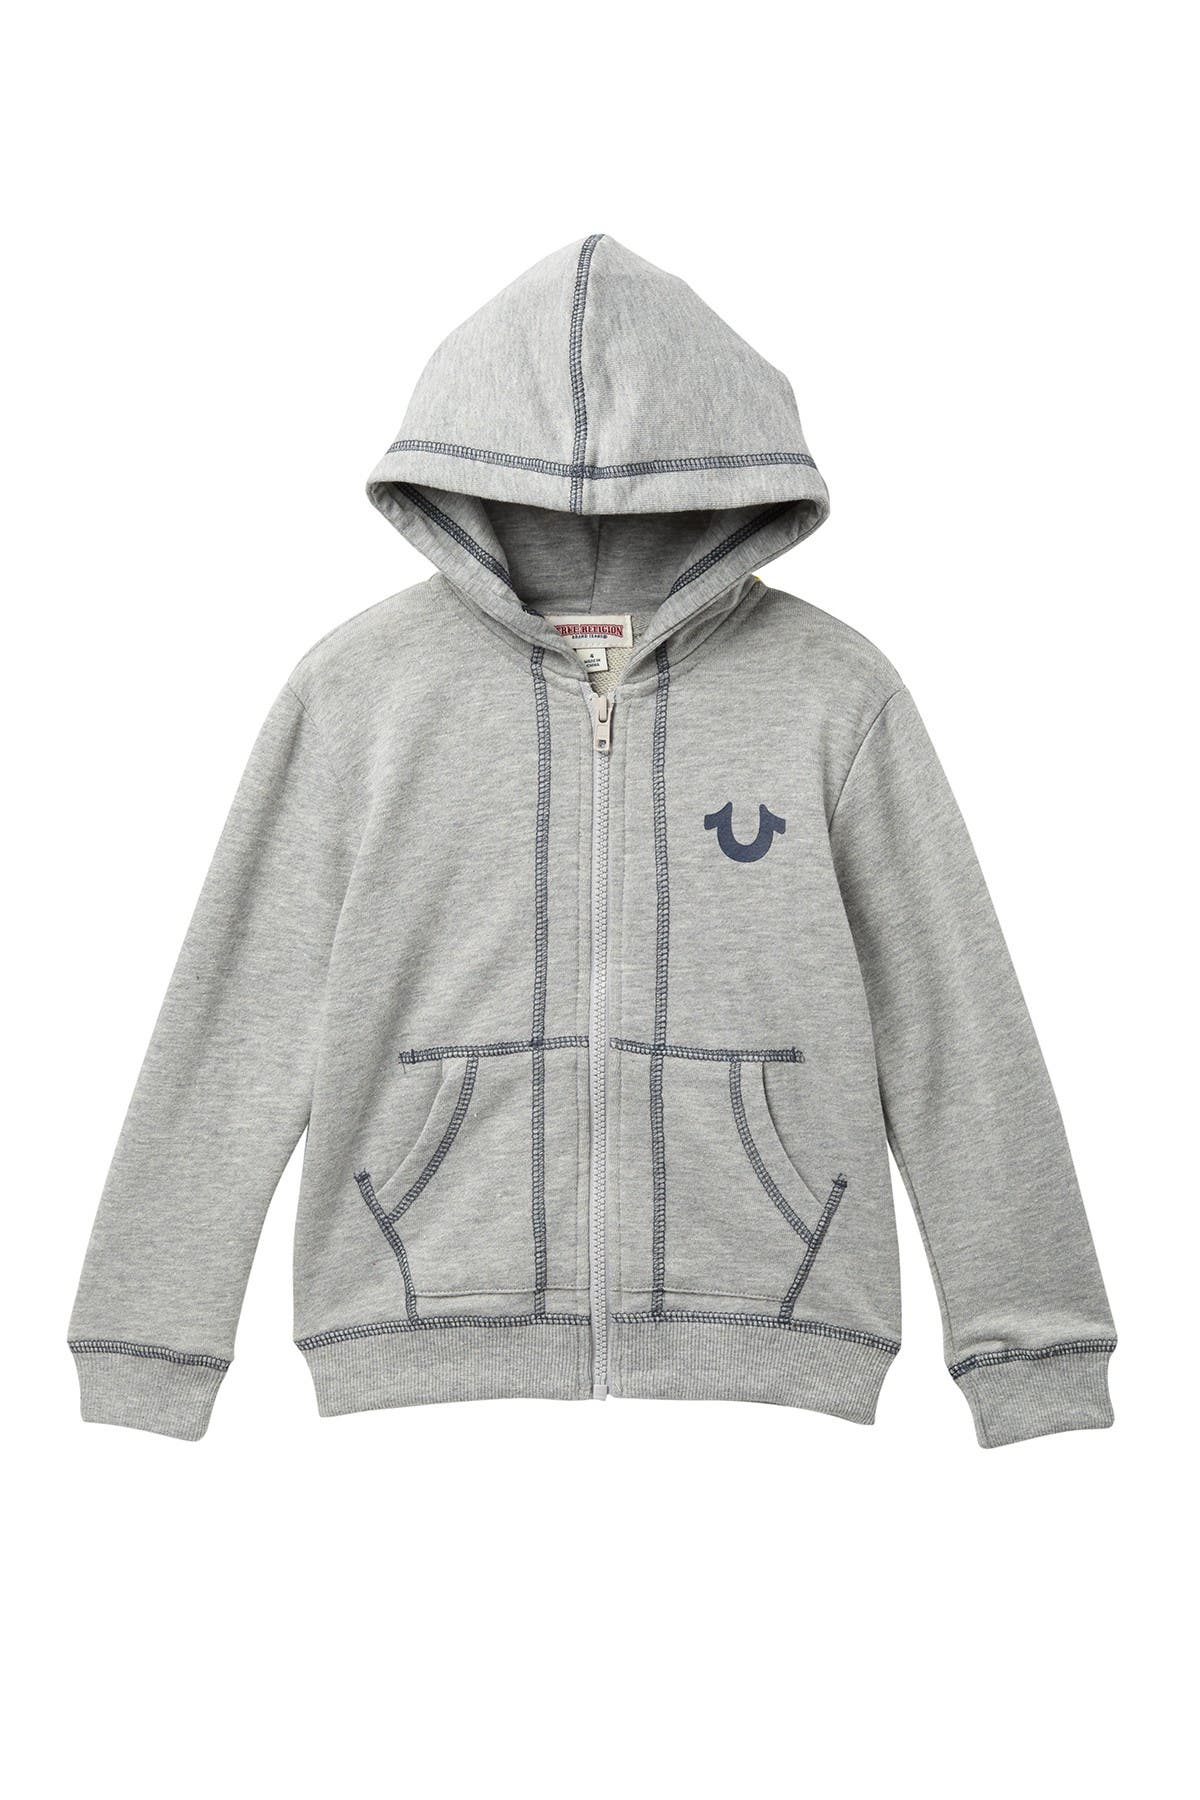 true religion gray hoodie